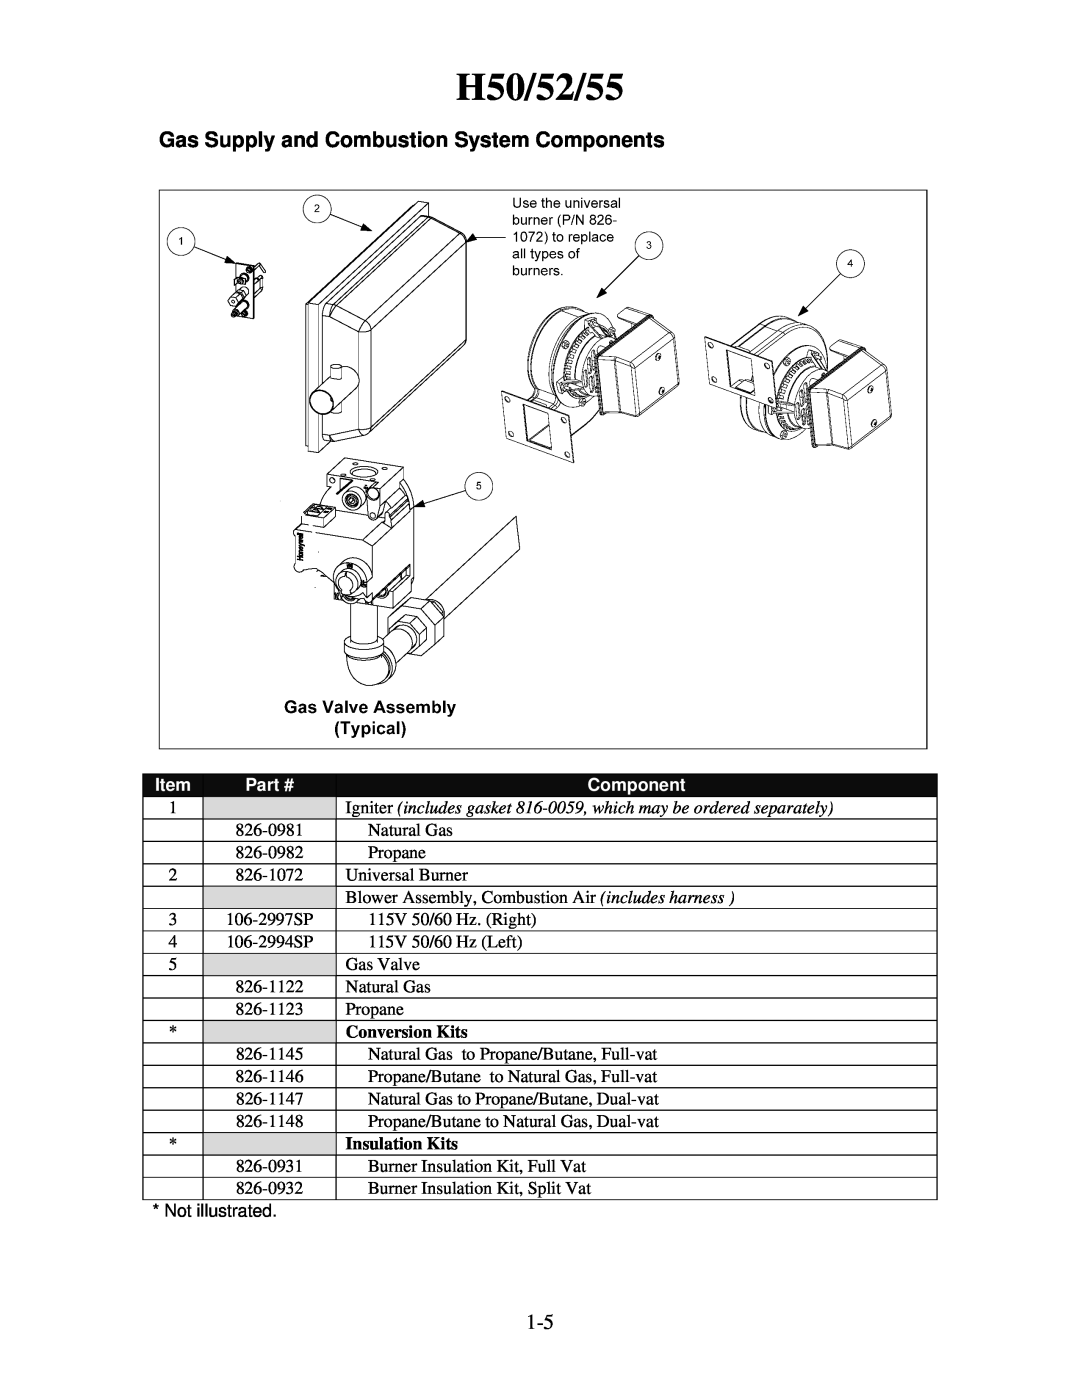 Frymaster 8196321 manual H50/52/55, Component, Conversion Kits, Insulation Kits 